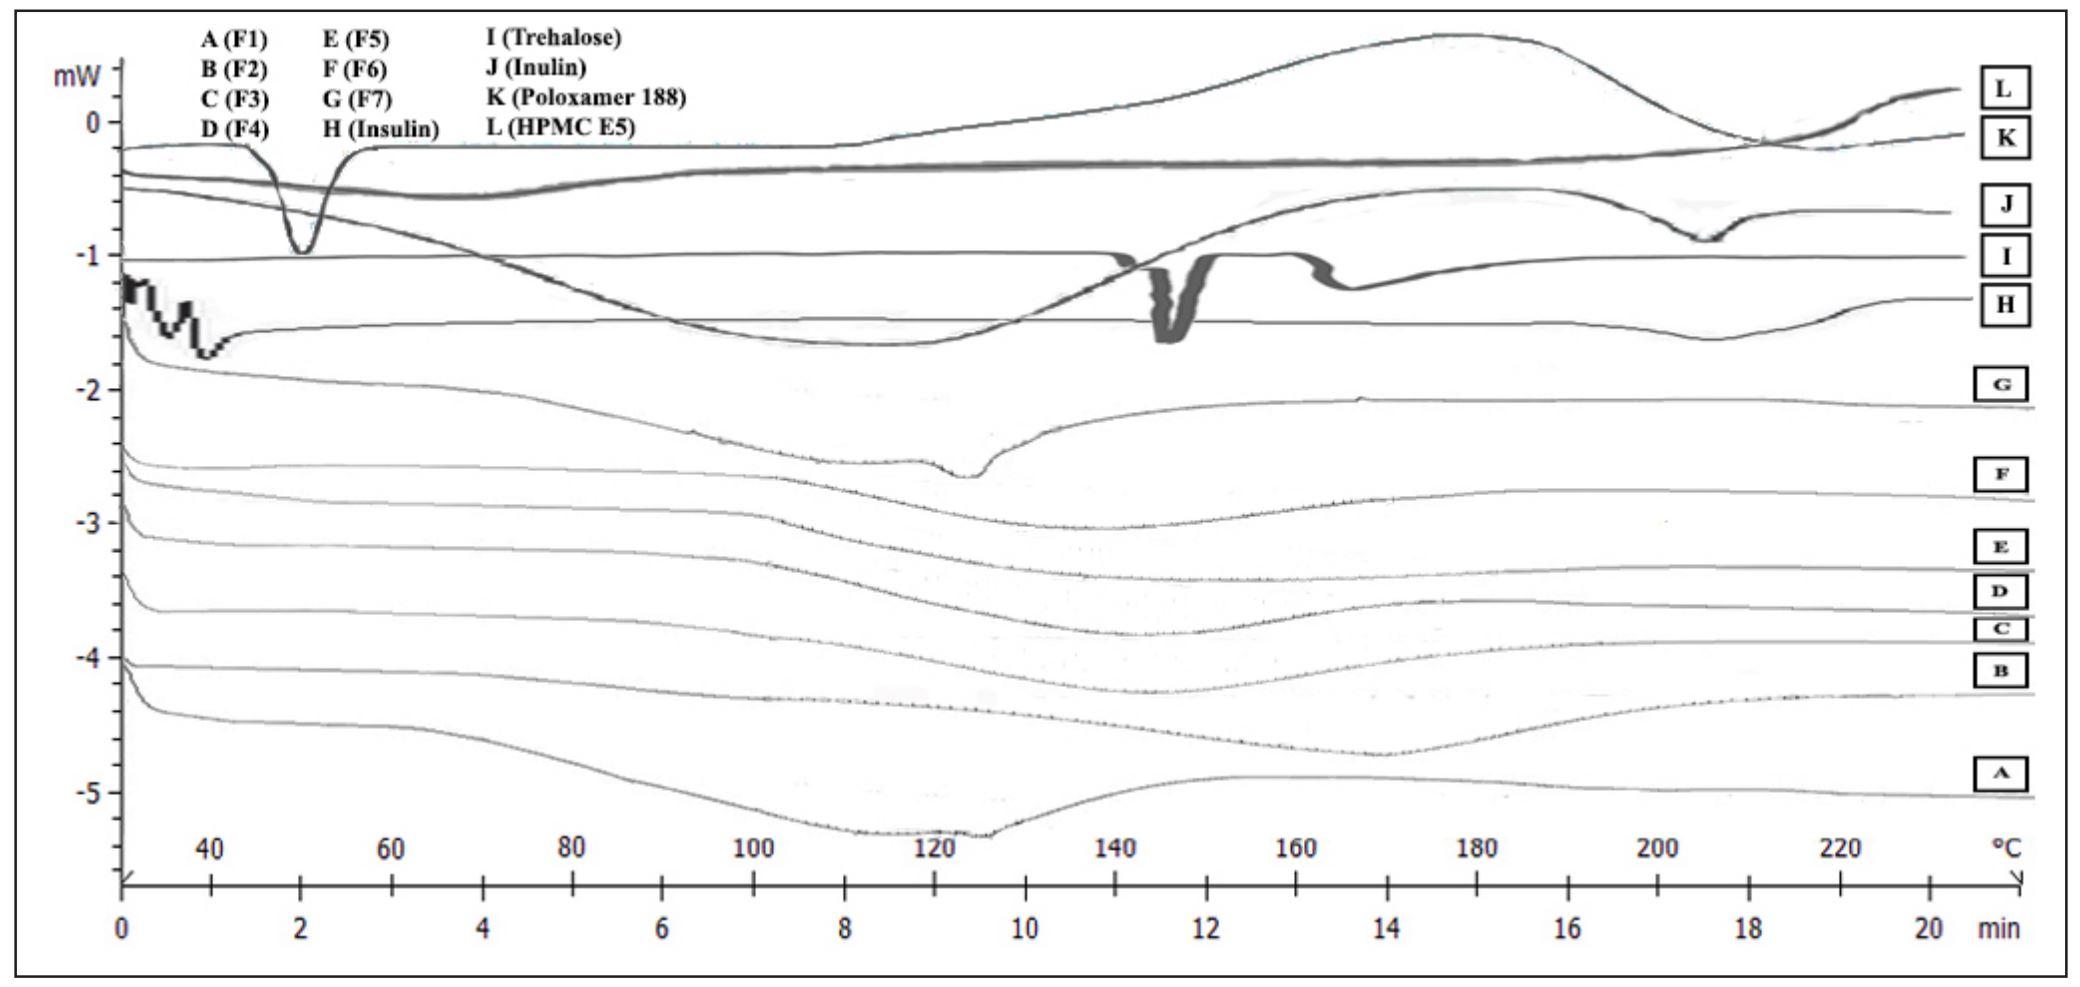 Figure 2. Endothermic curves of F1 (A), F2 (B), F3 (C), F4 (D), F5 (E), F6 (F), F7 (G) IDP, insulin (H), trehalose (I), inulin (J), poloxamer 188 (K), and HPMC E5 (L).